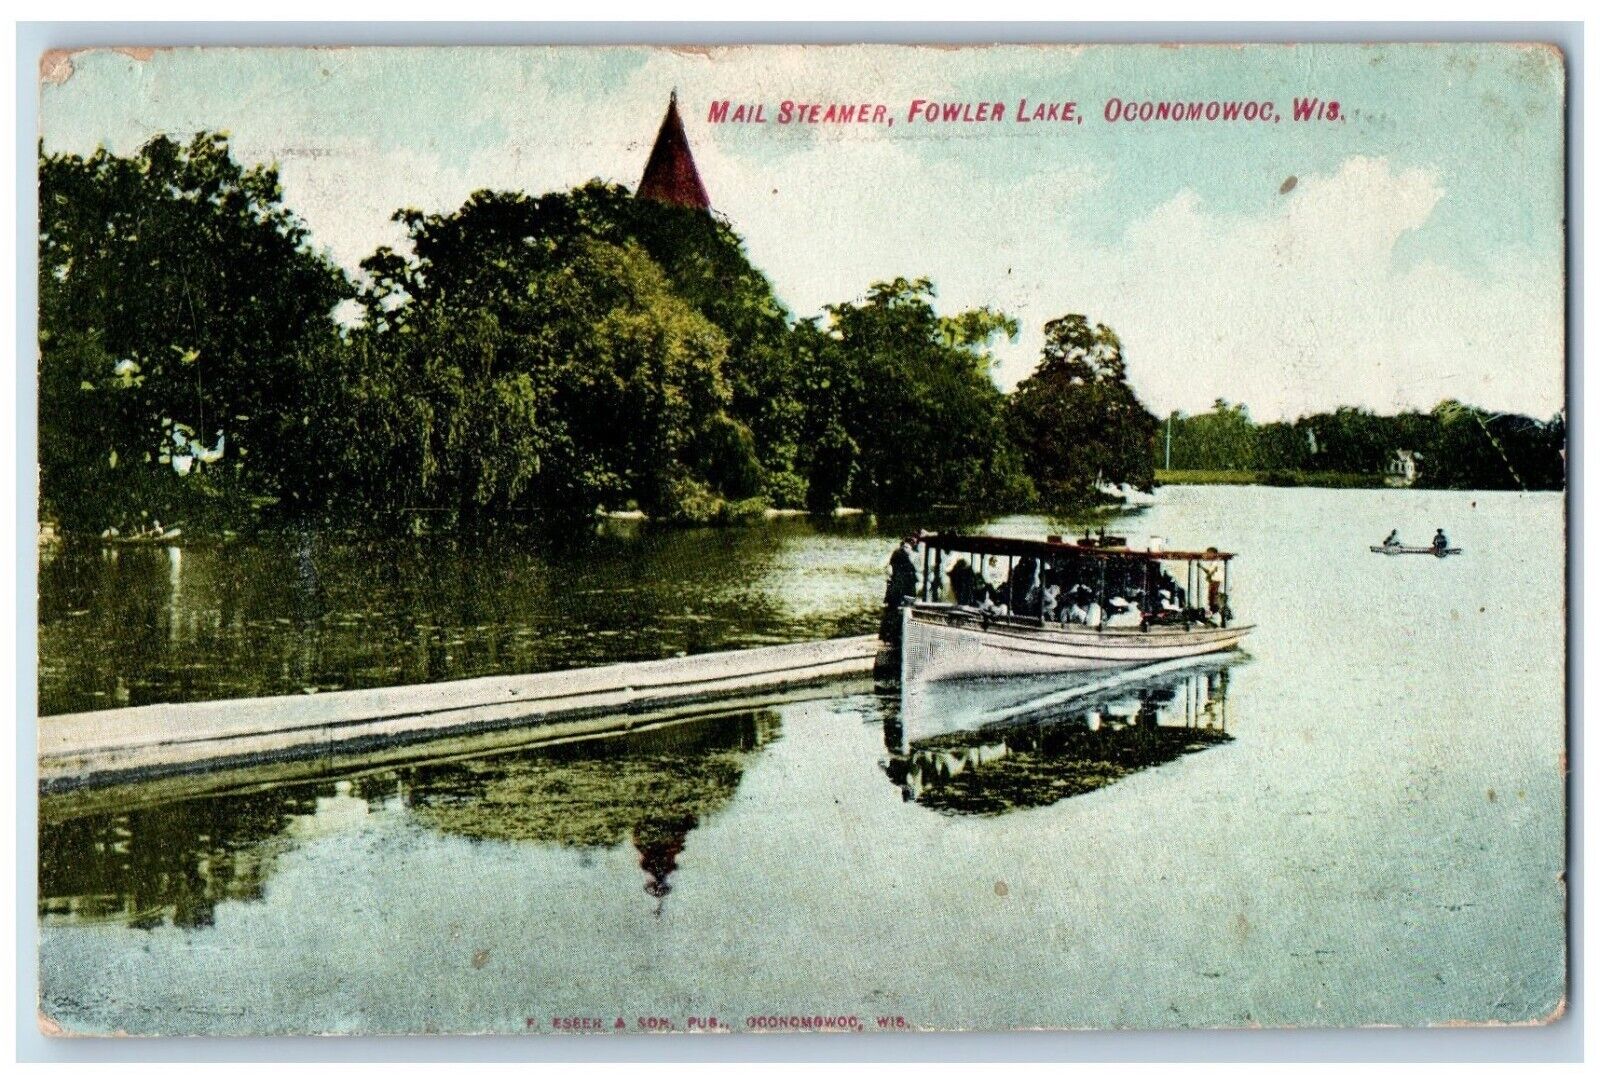 Oconomowoc Wisconsin WI Postcard Mail Steamer Fowler Lake c1908 Vintage Antique